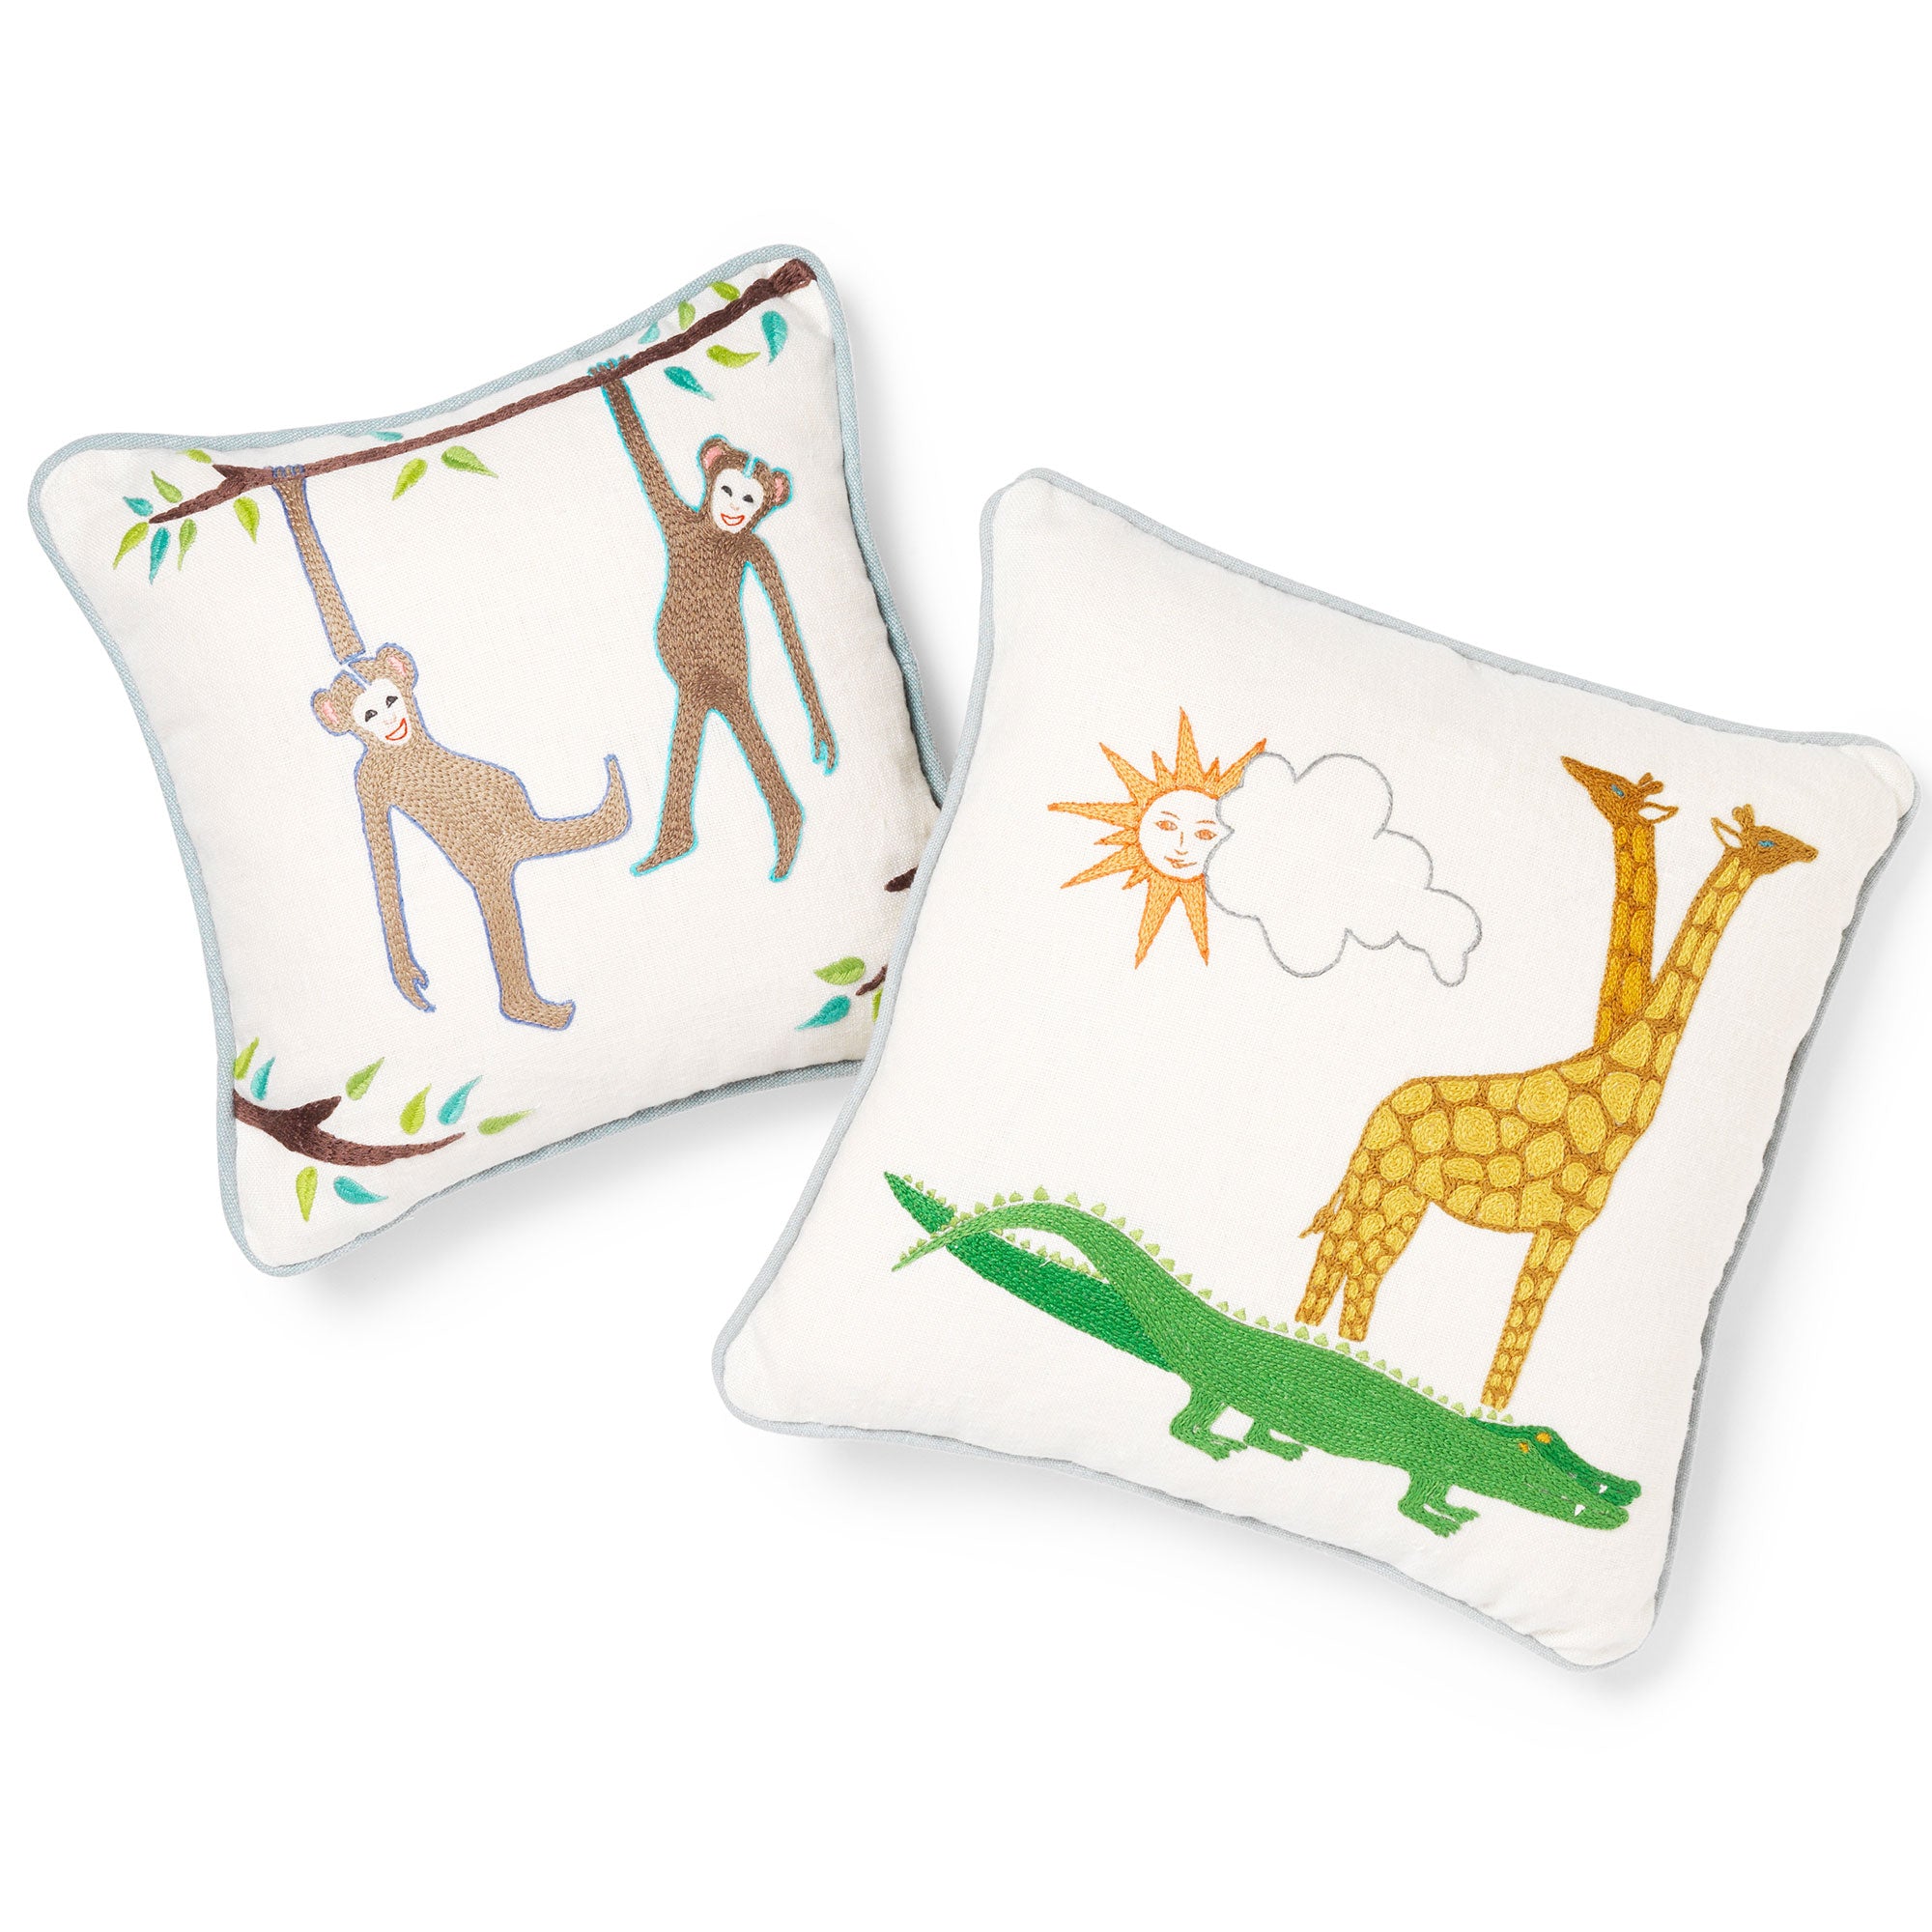 Noah's Ark Hand-Embroidered Crocodile and Giraffe Cushion Marion Rhoades for Fine Cell Work